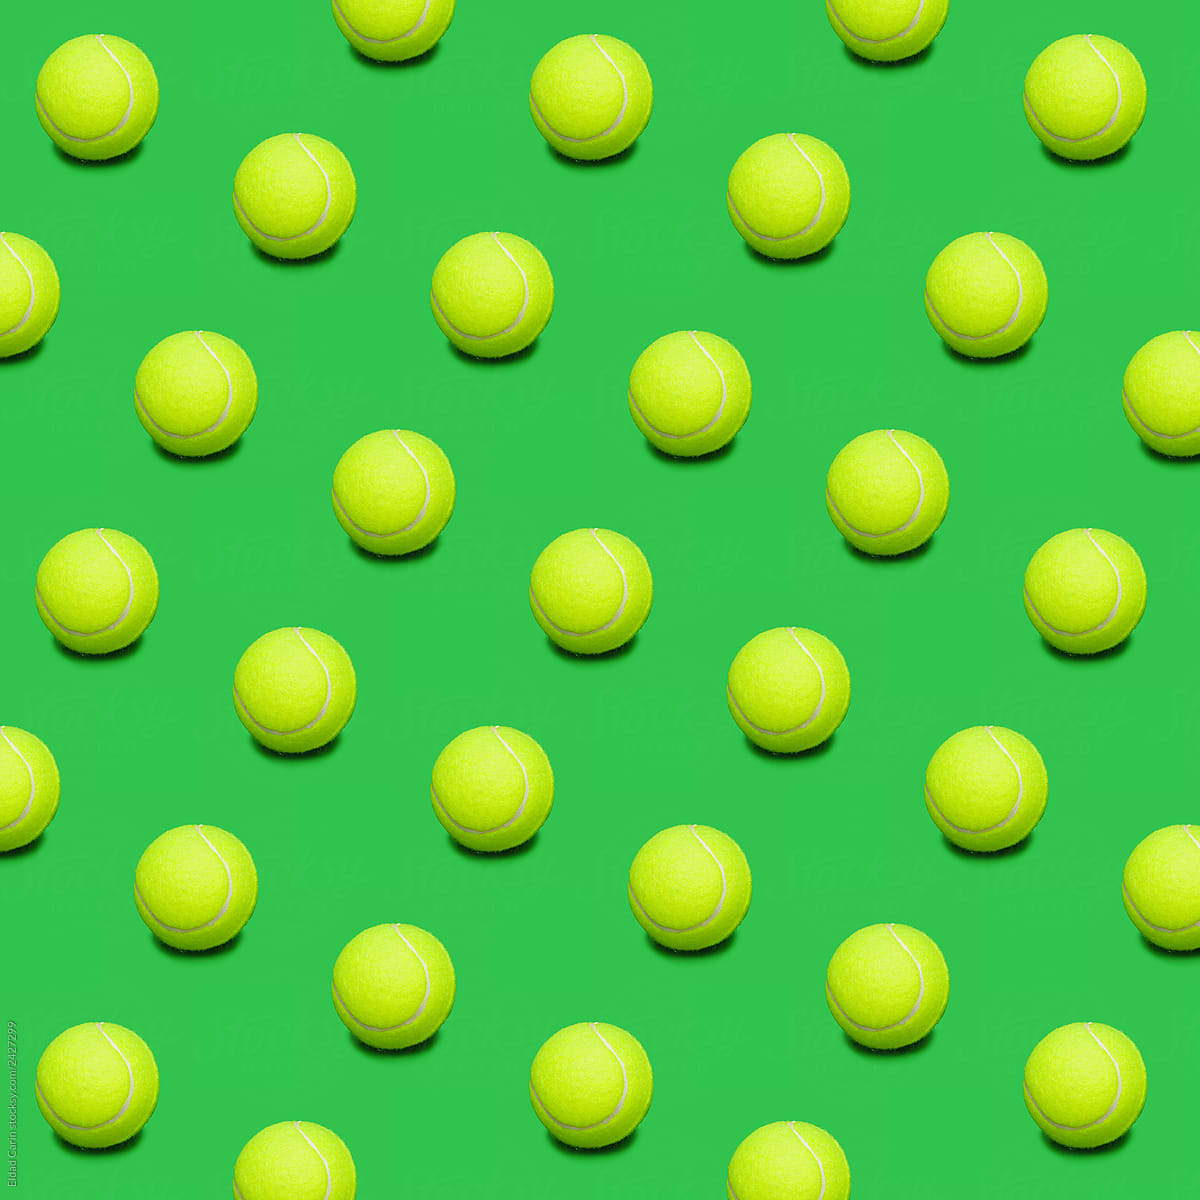 Tennis Ball Pattern on Green